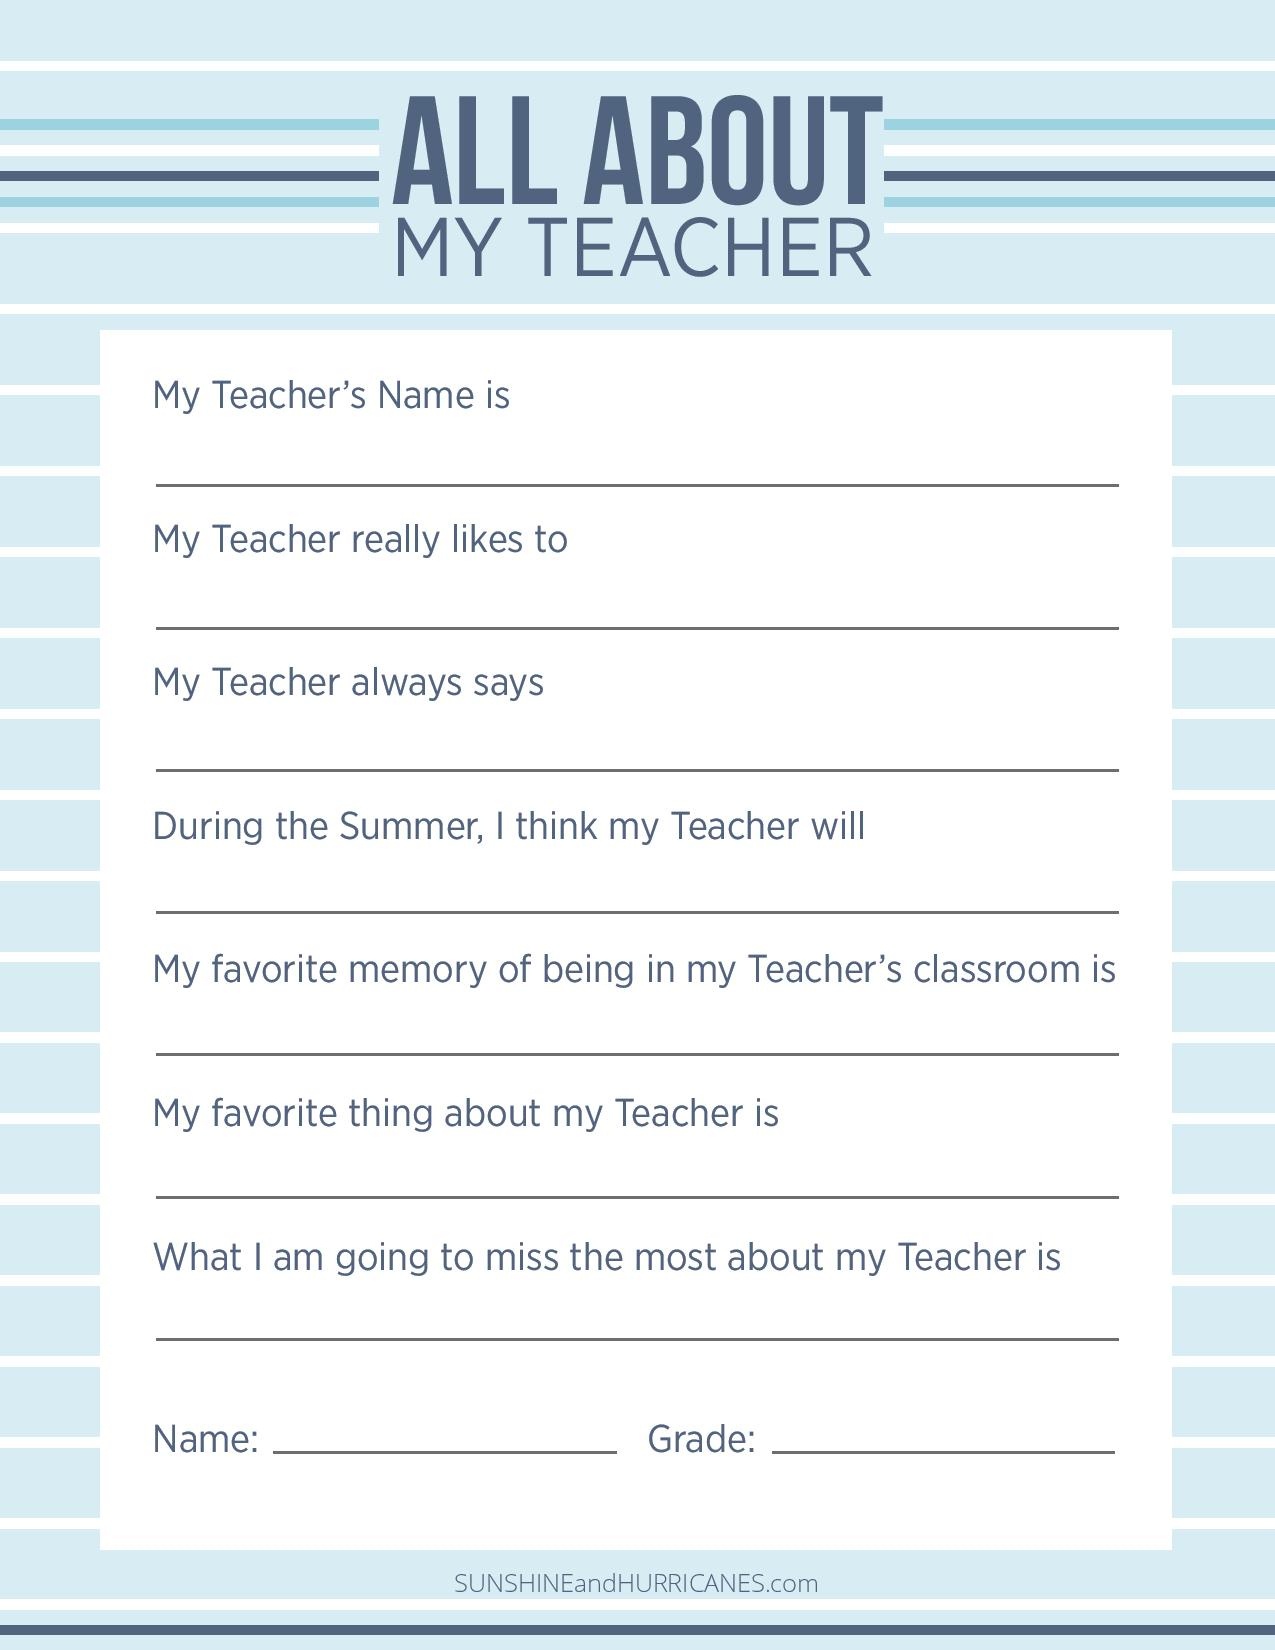 Teacher Appreciation Week Questionnaire - A Personalized Teacher Gift - Make A Printable Survey Free